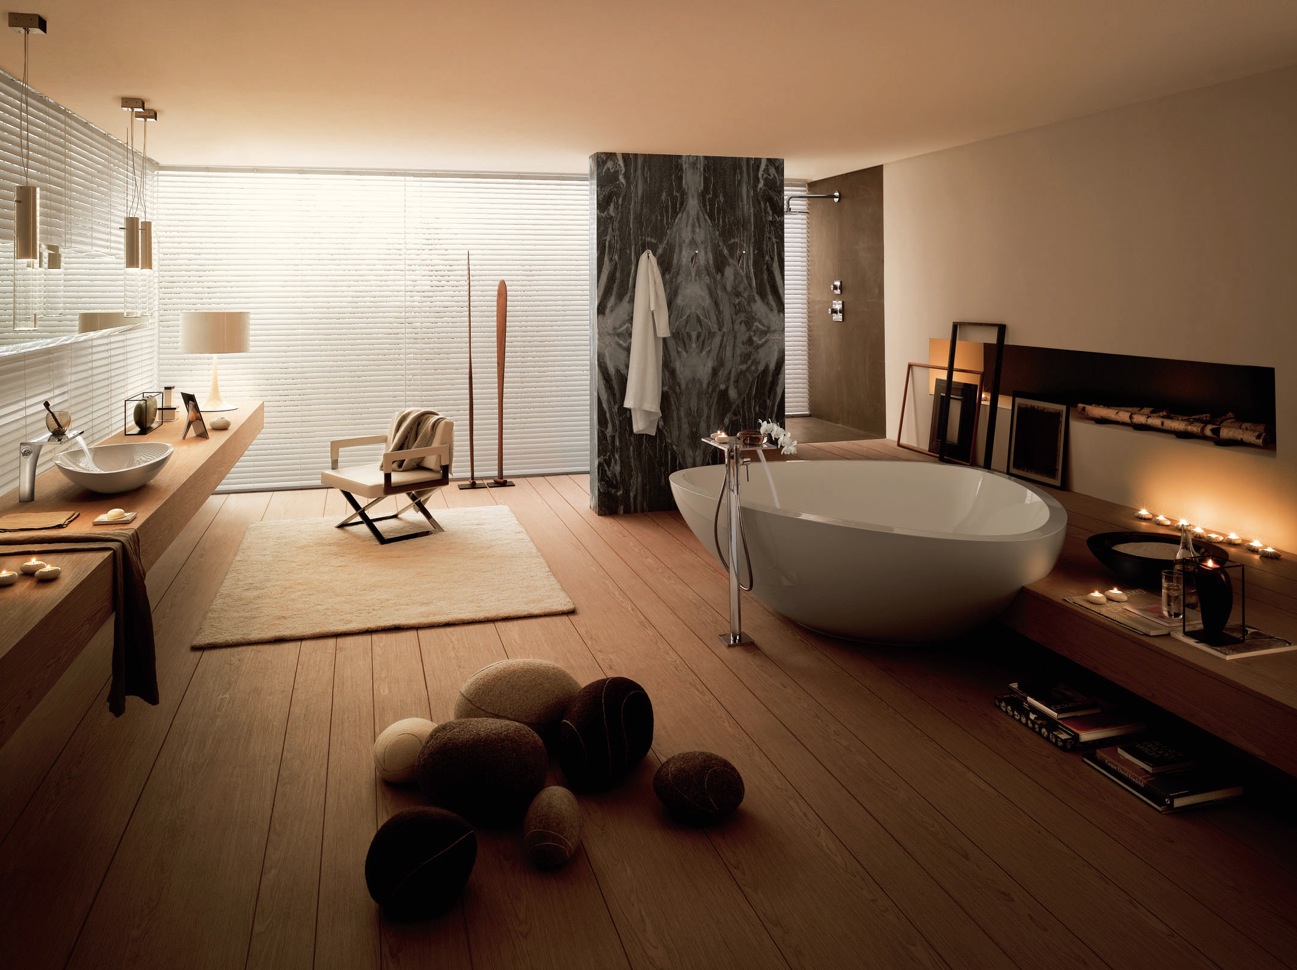 Home Improvement Idea – Bathroom Designs